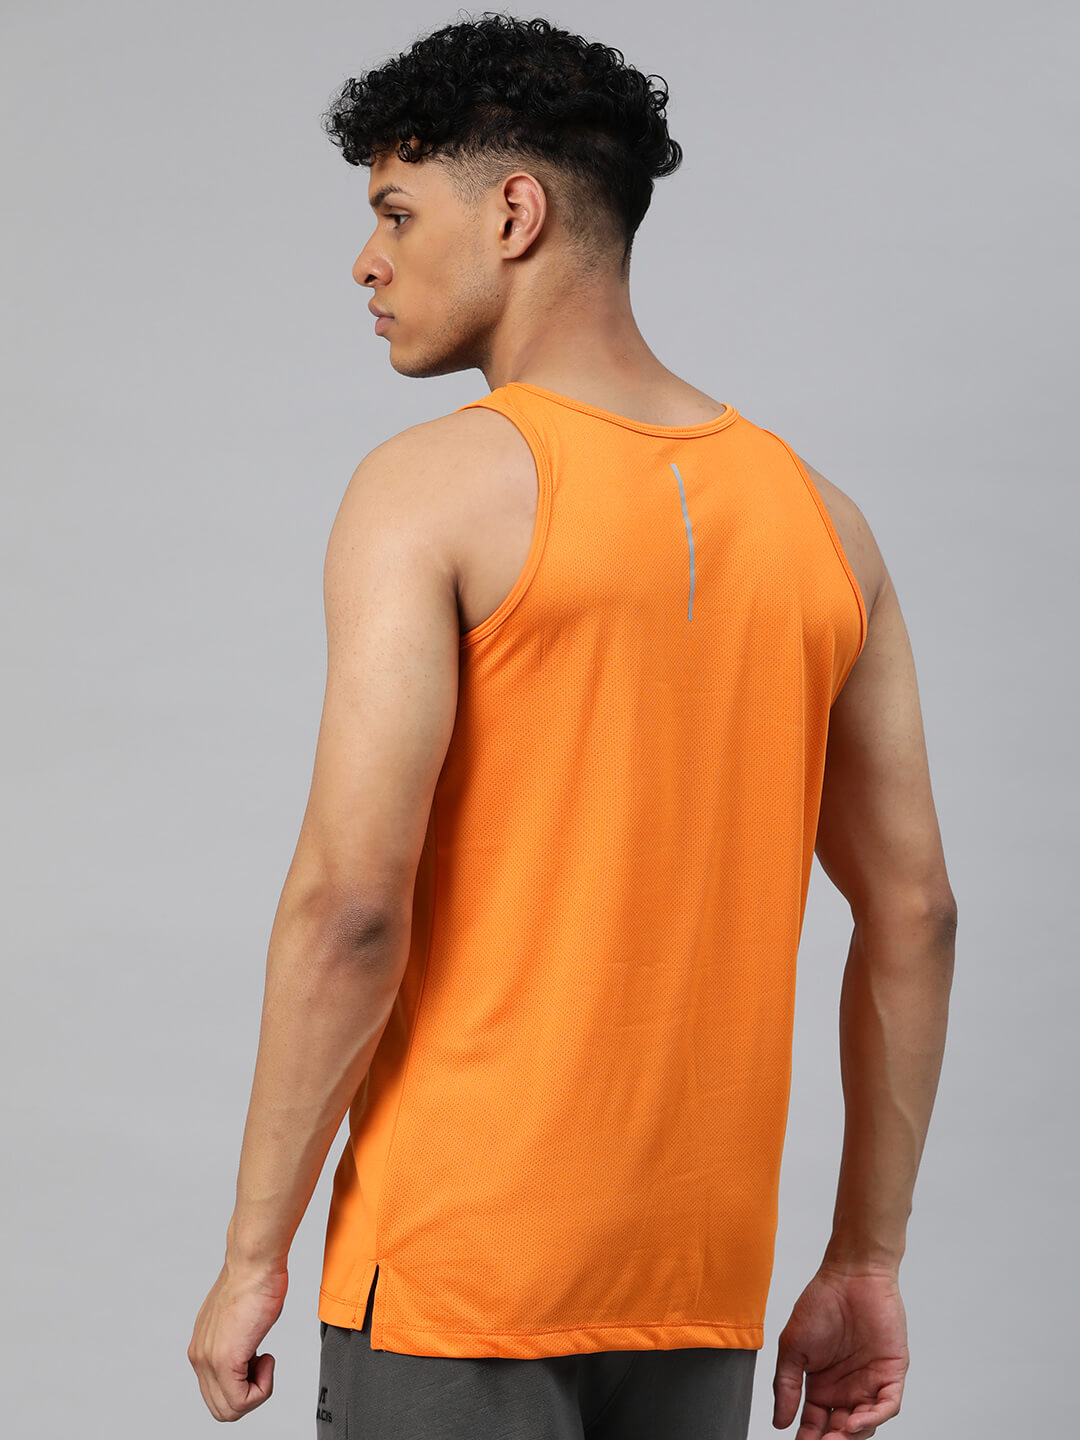 Alcis Men Orange Anti Static Slim Fit T-shirt